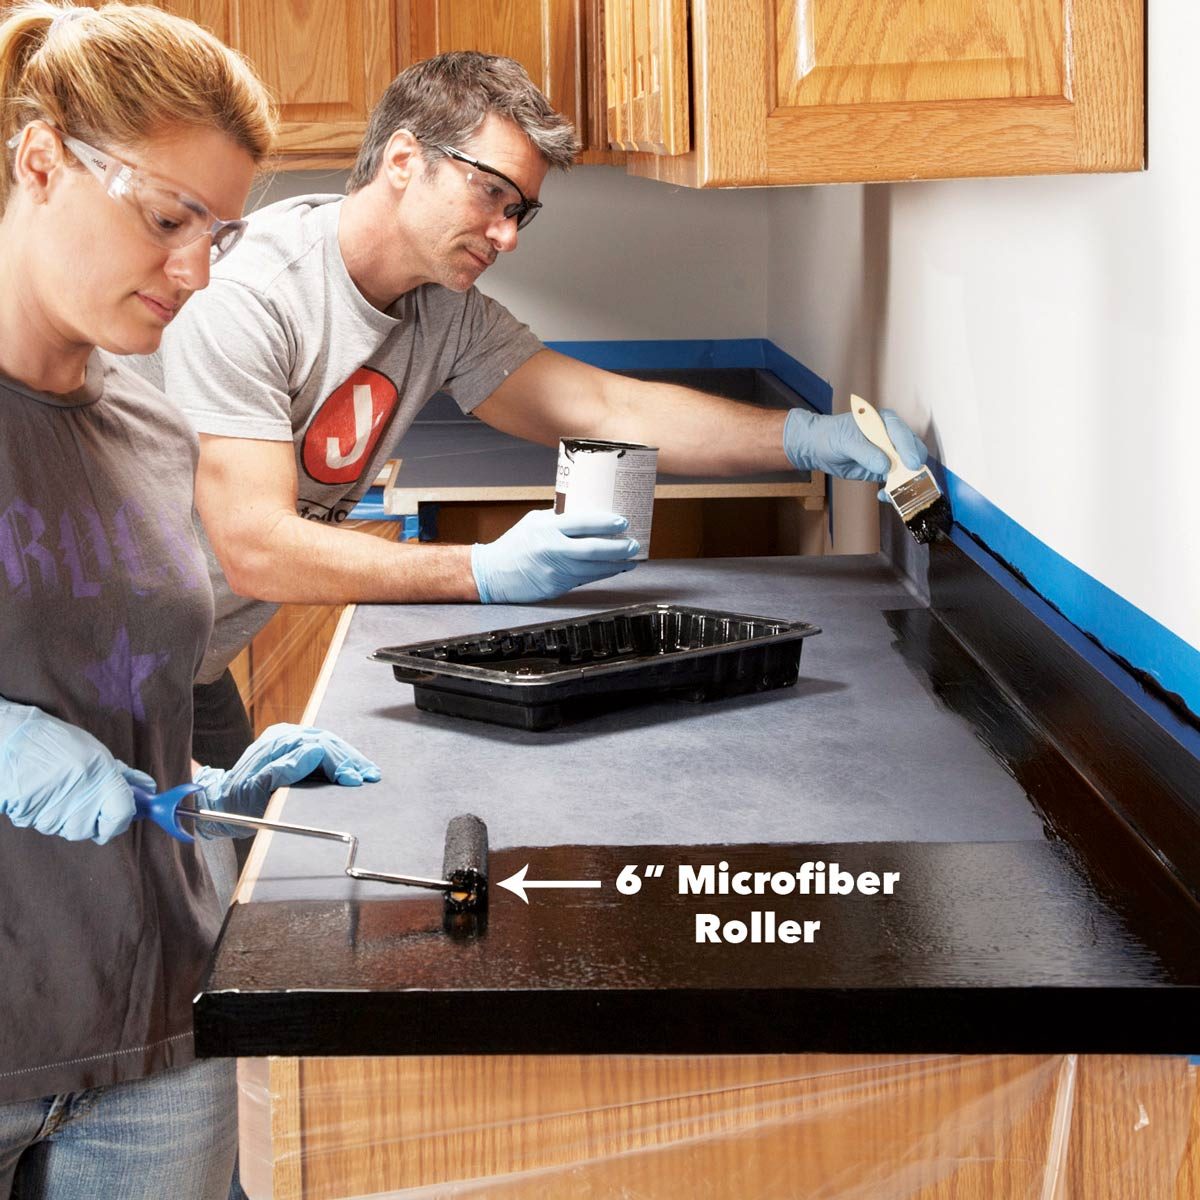 Ideas For The Kitchen Renew Kitchen Countertops Family Handyman